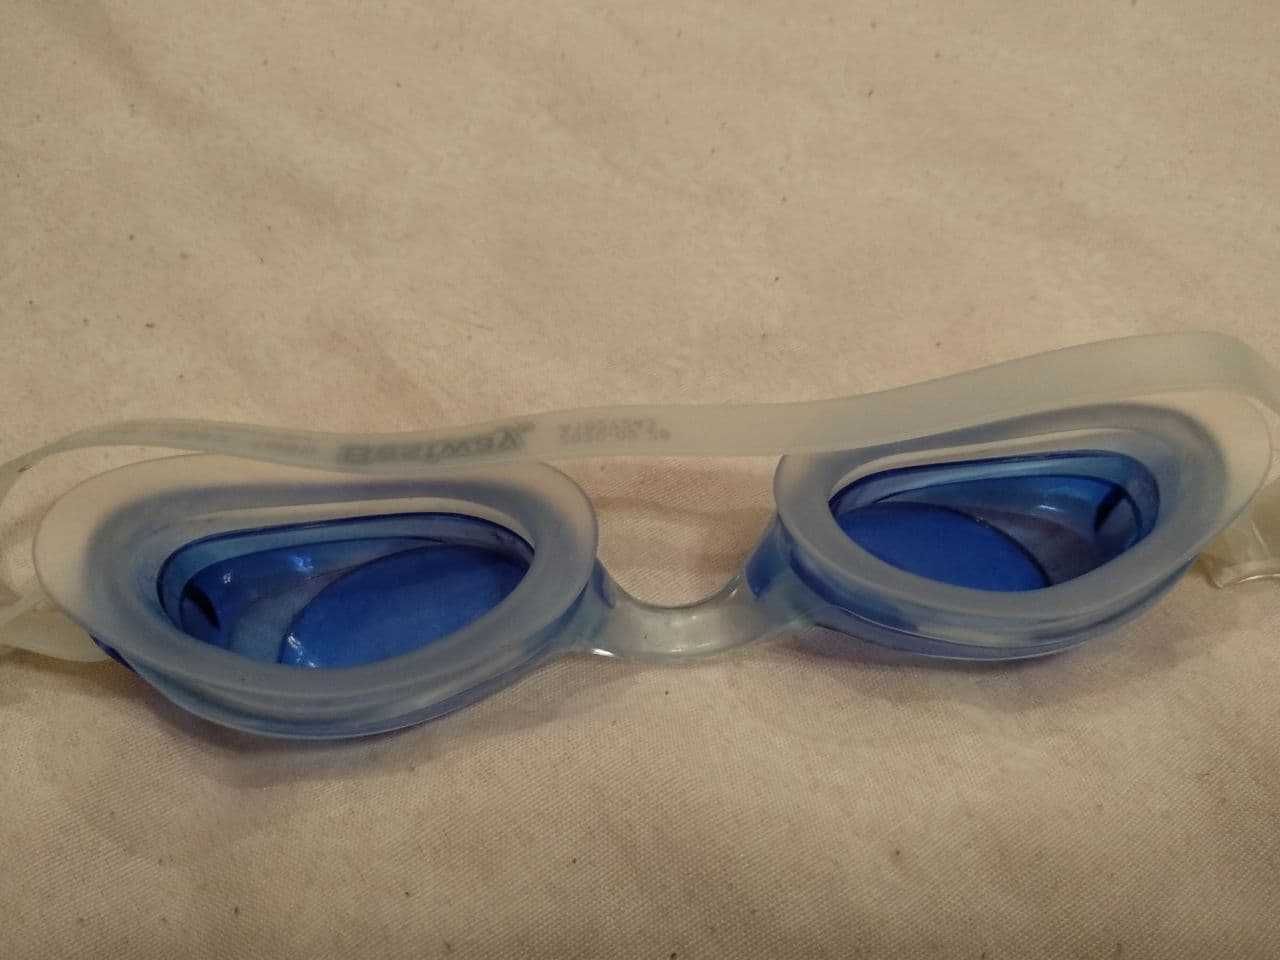 Очки для подводного плавания на подростков